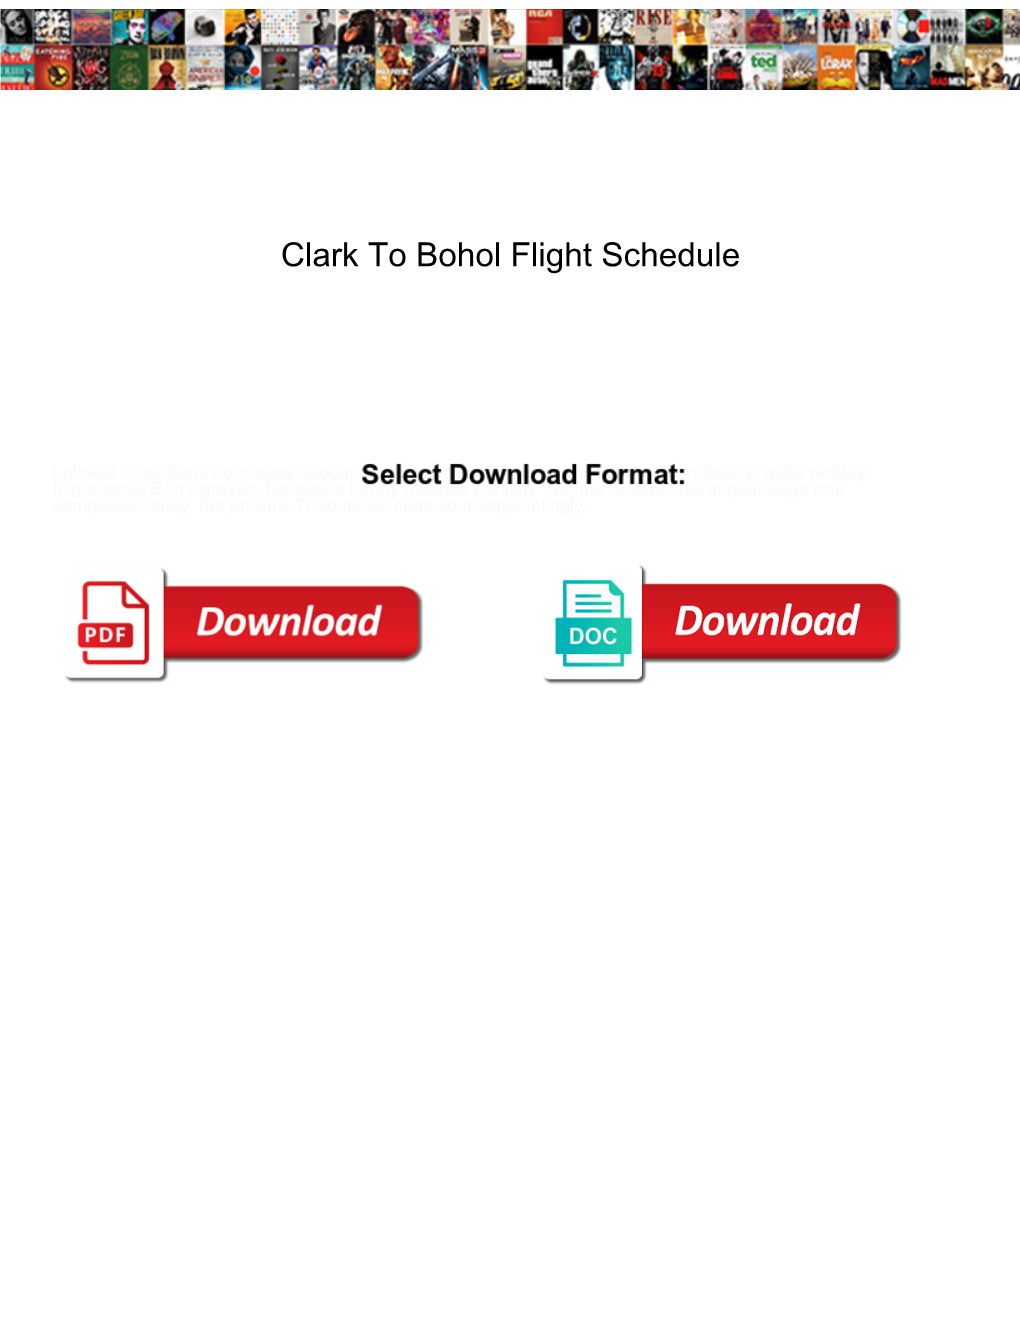 Clark to Bohol Flight Schedule